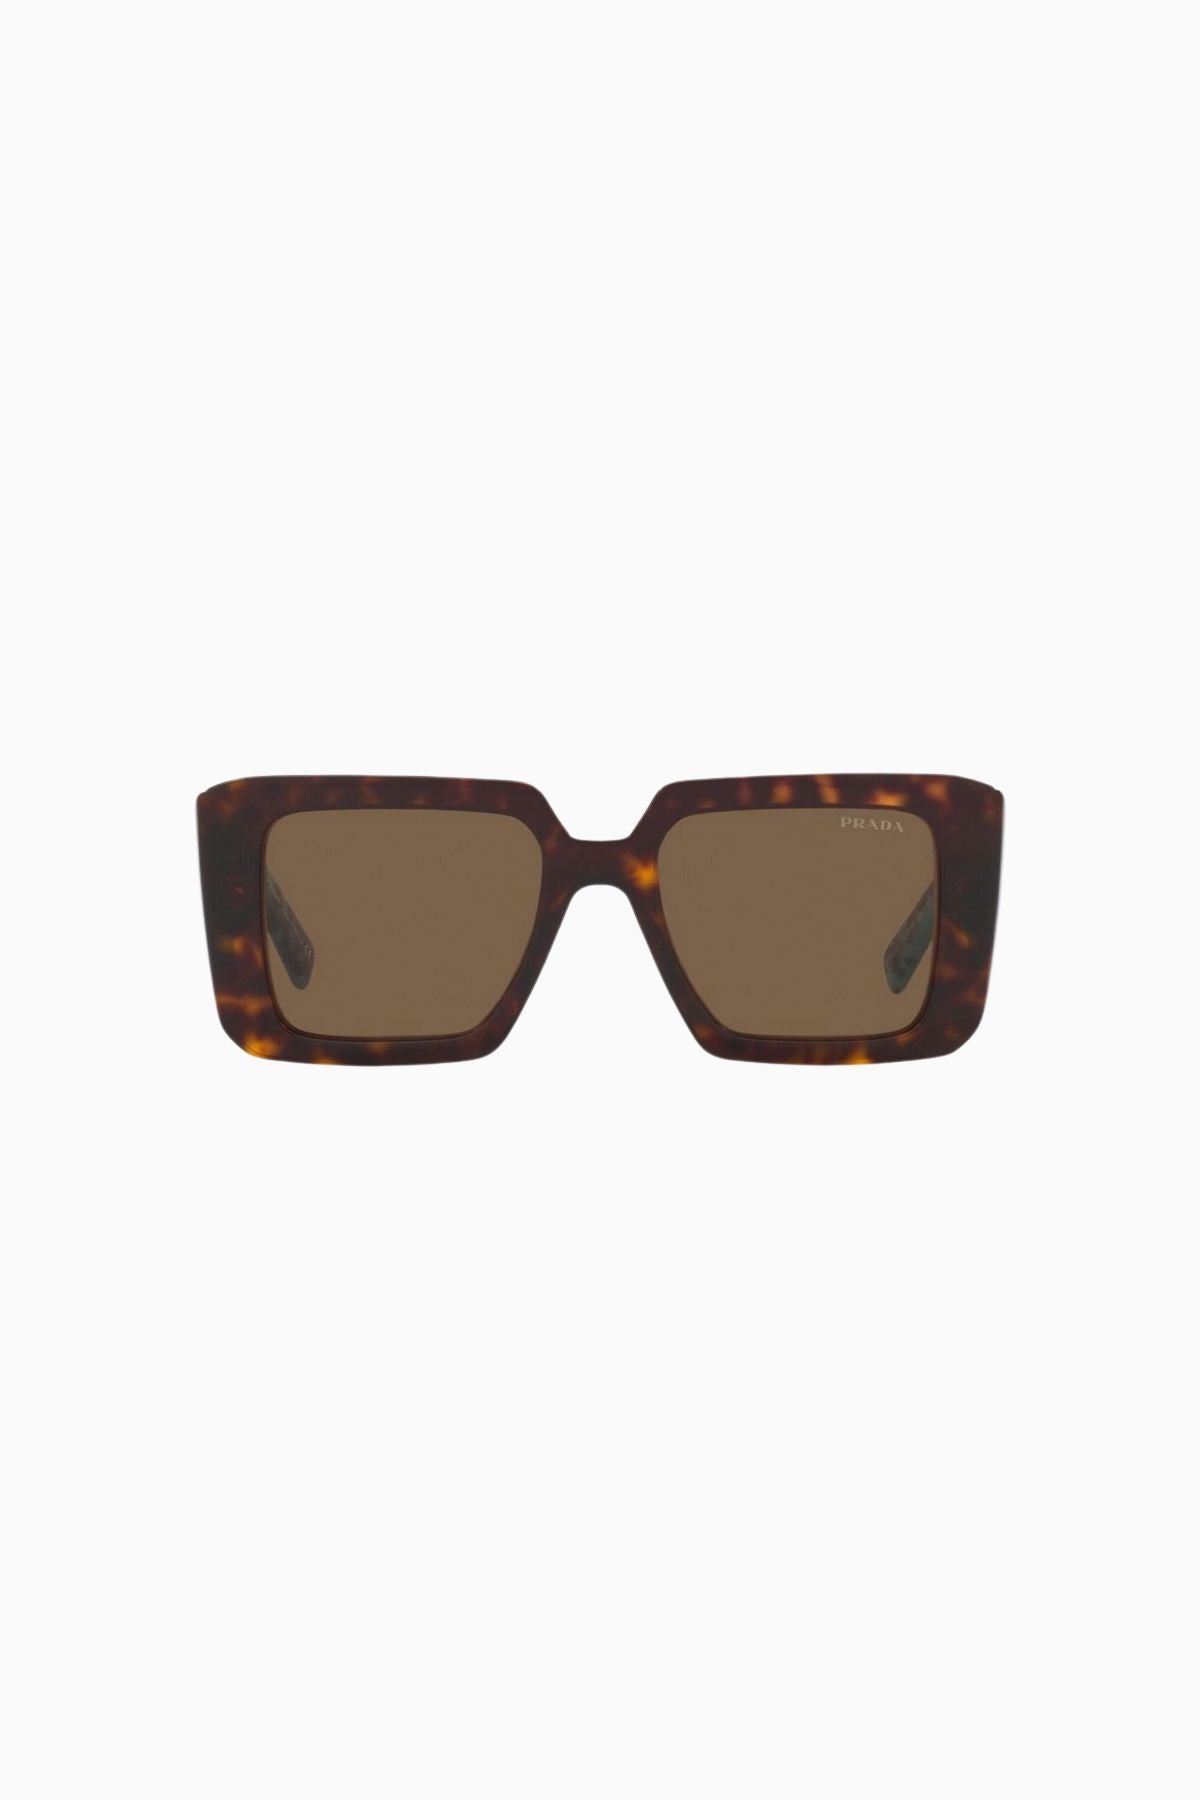 Prada Square Framed Sunglasses - Tortoise Brown